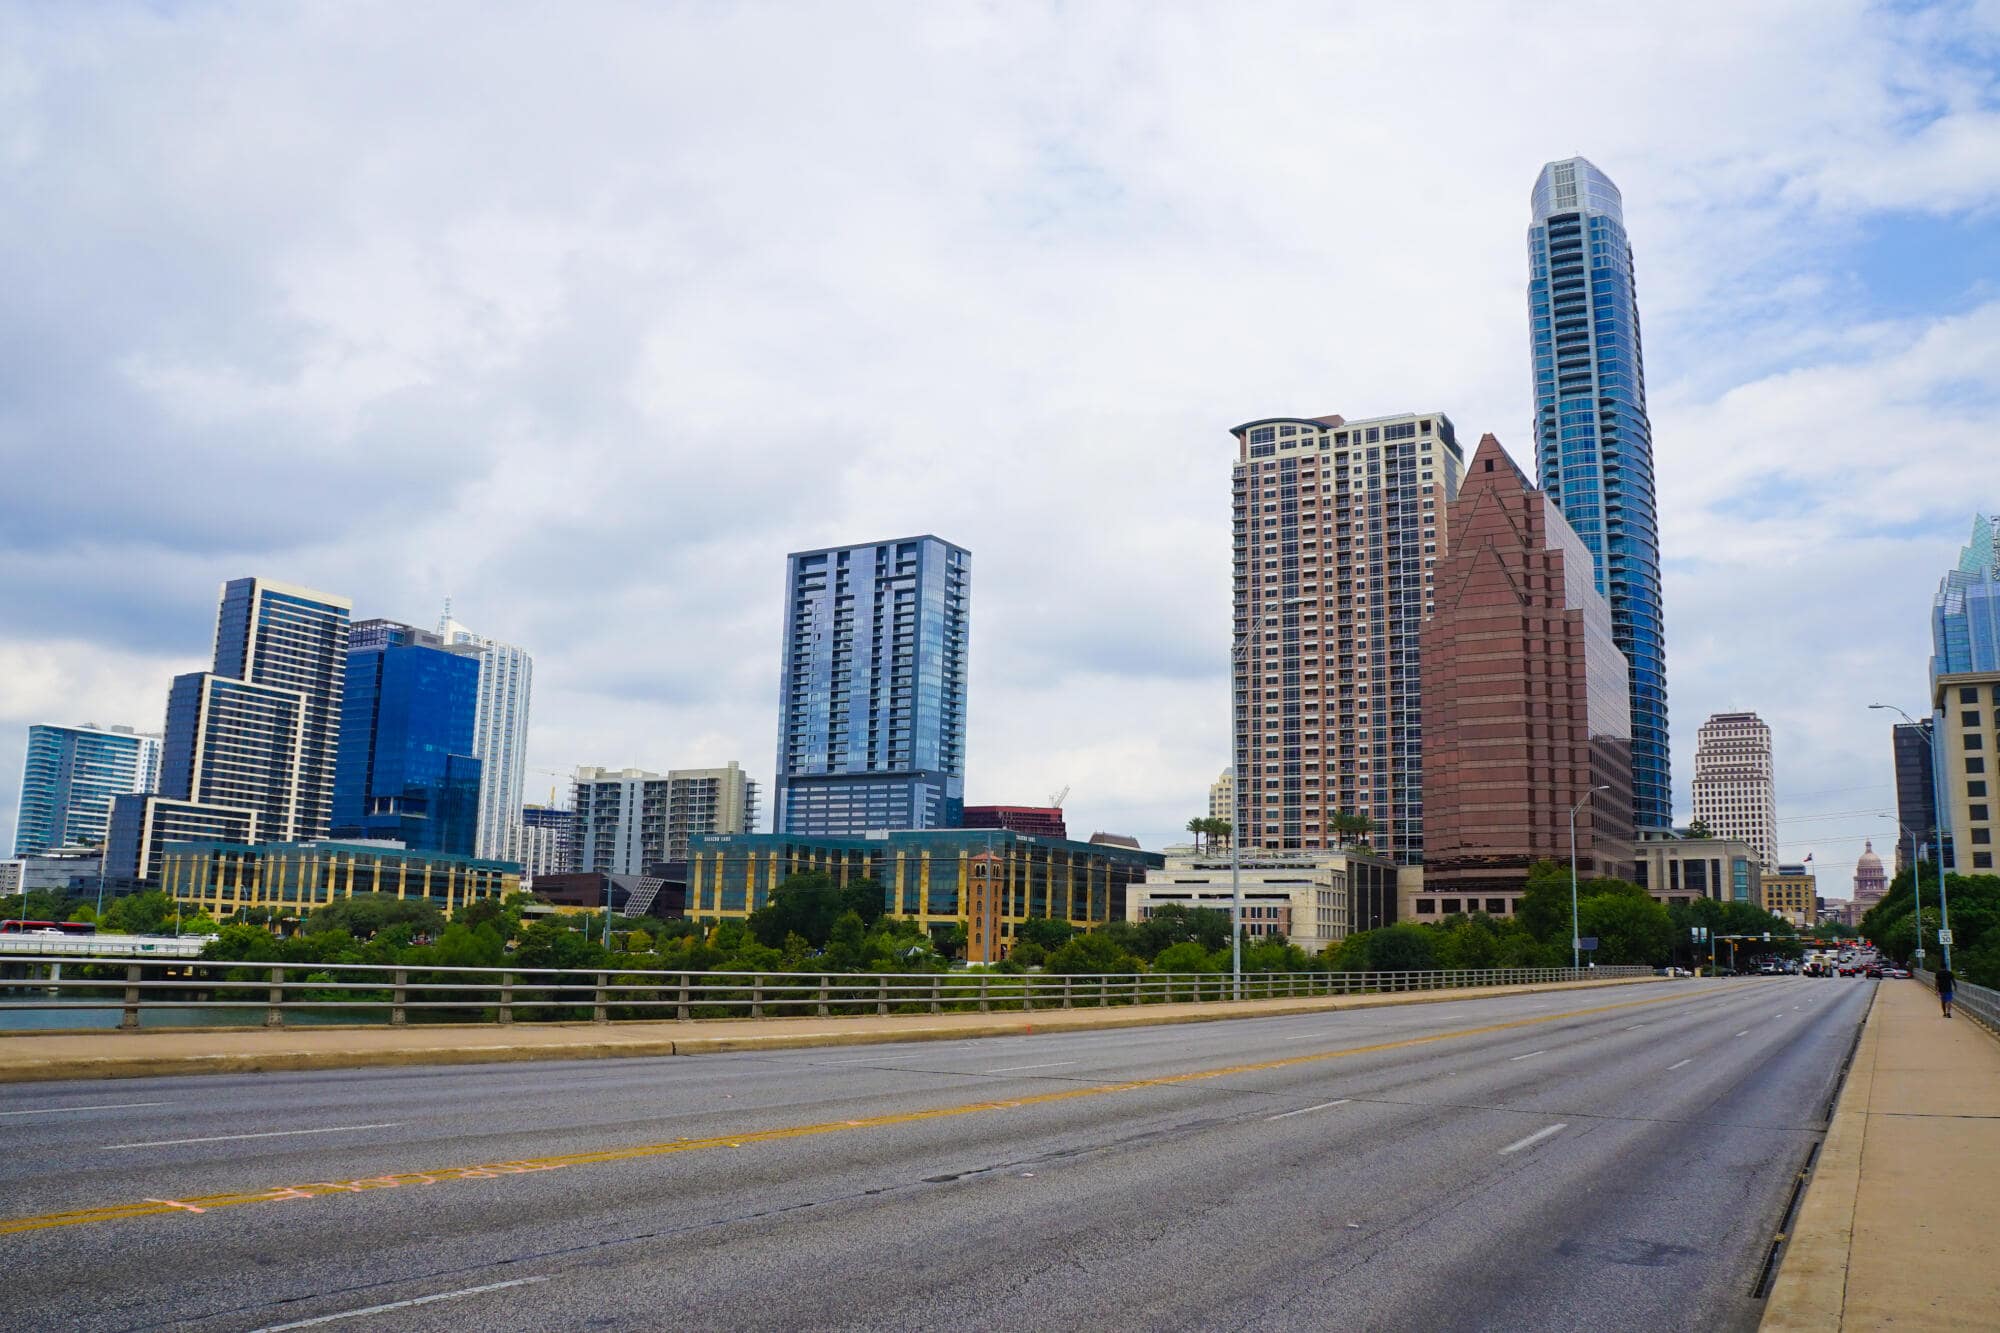 Commercial Real Estate in Austin, TX: A Primer for Investors